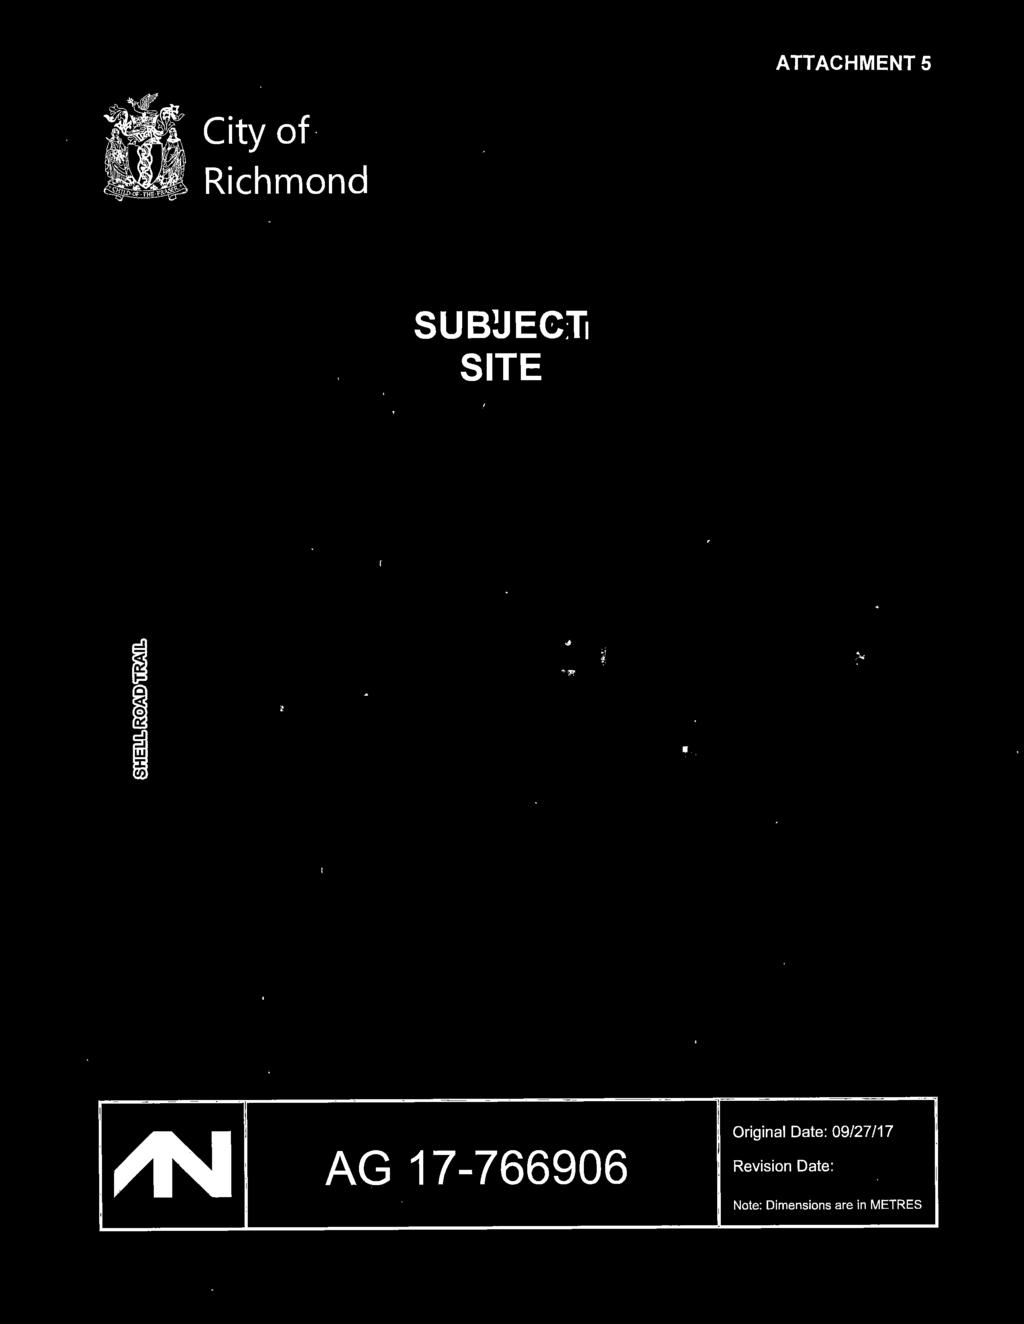 ATTACHMENT 5 City of Richmond AG 17-766906 Original Date: